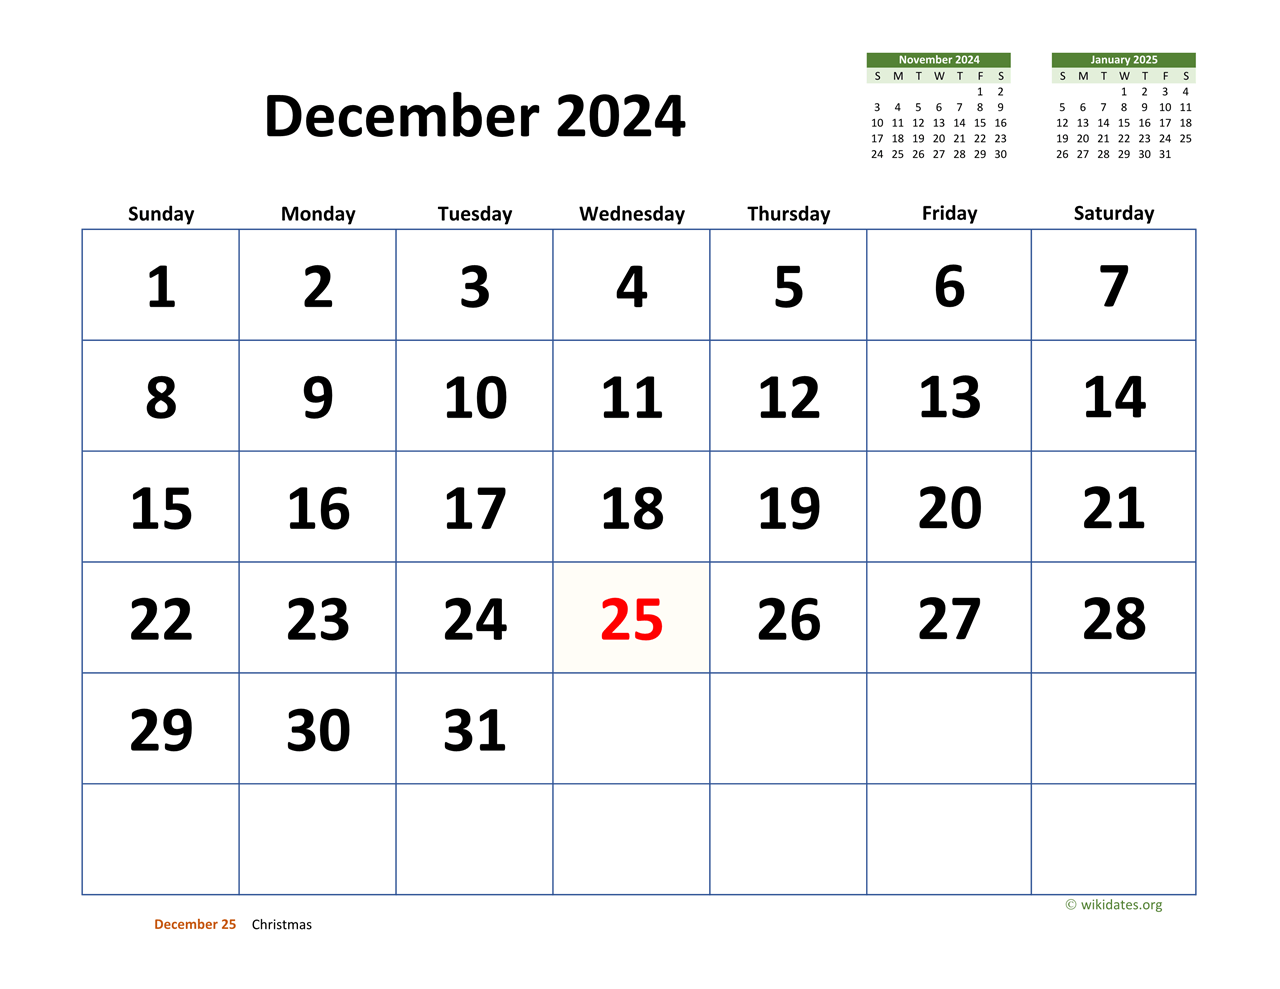 December 2024 Calendar with Extralarge Dates